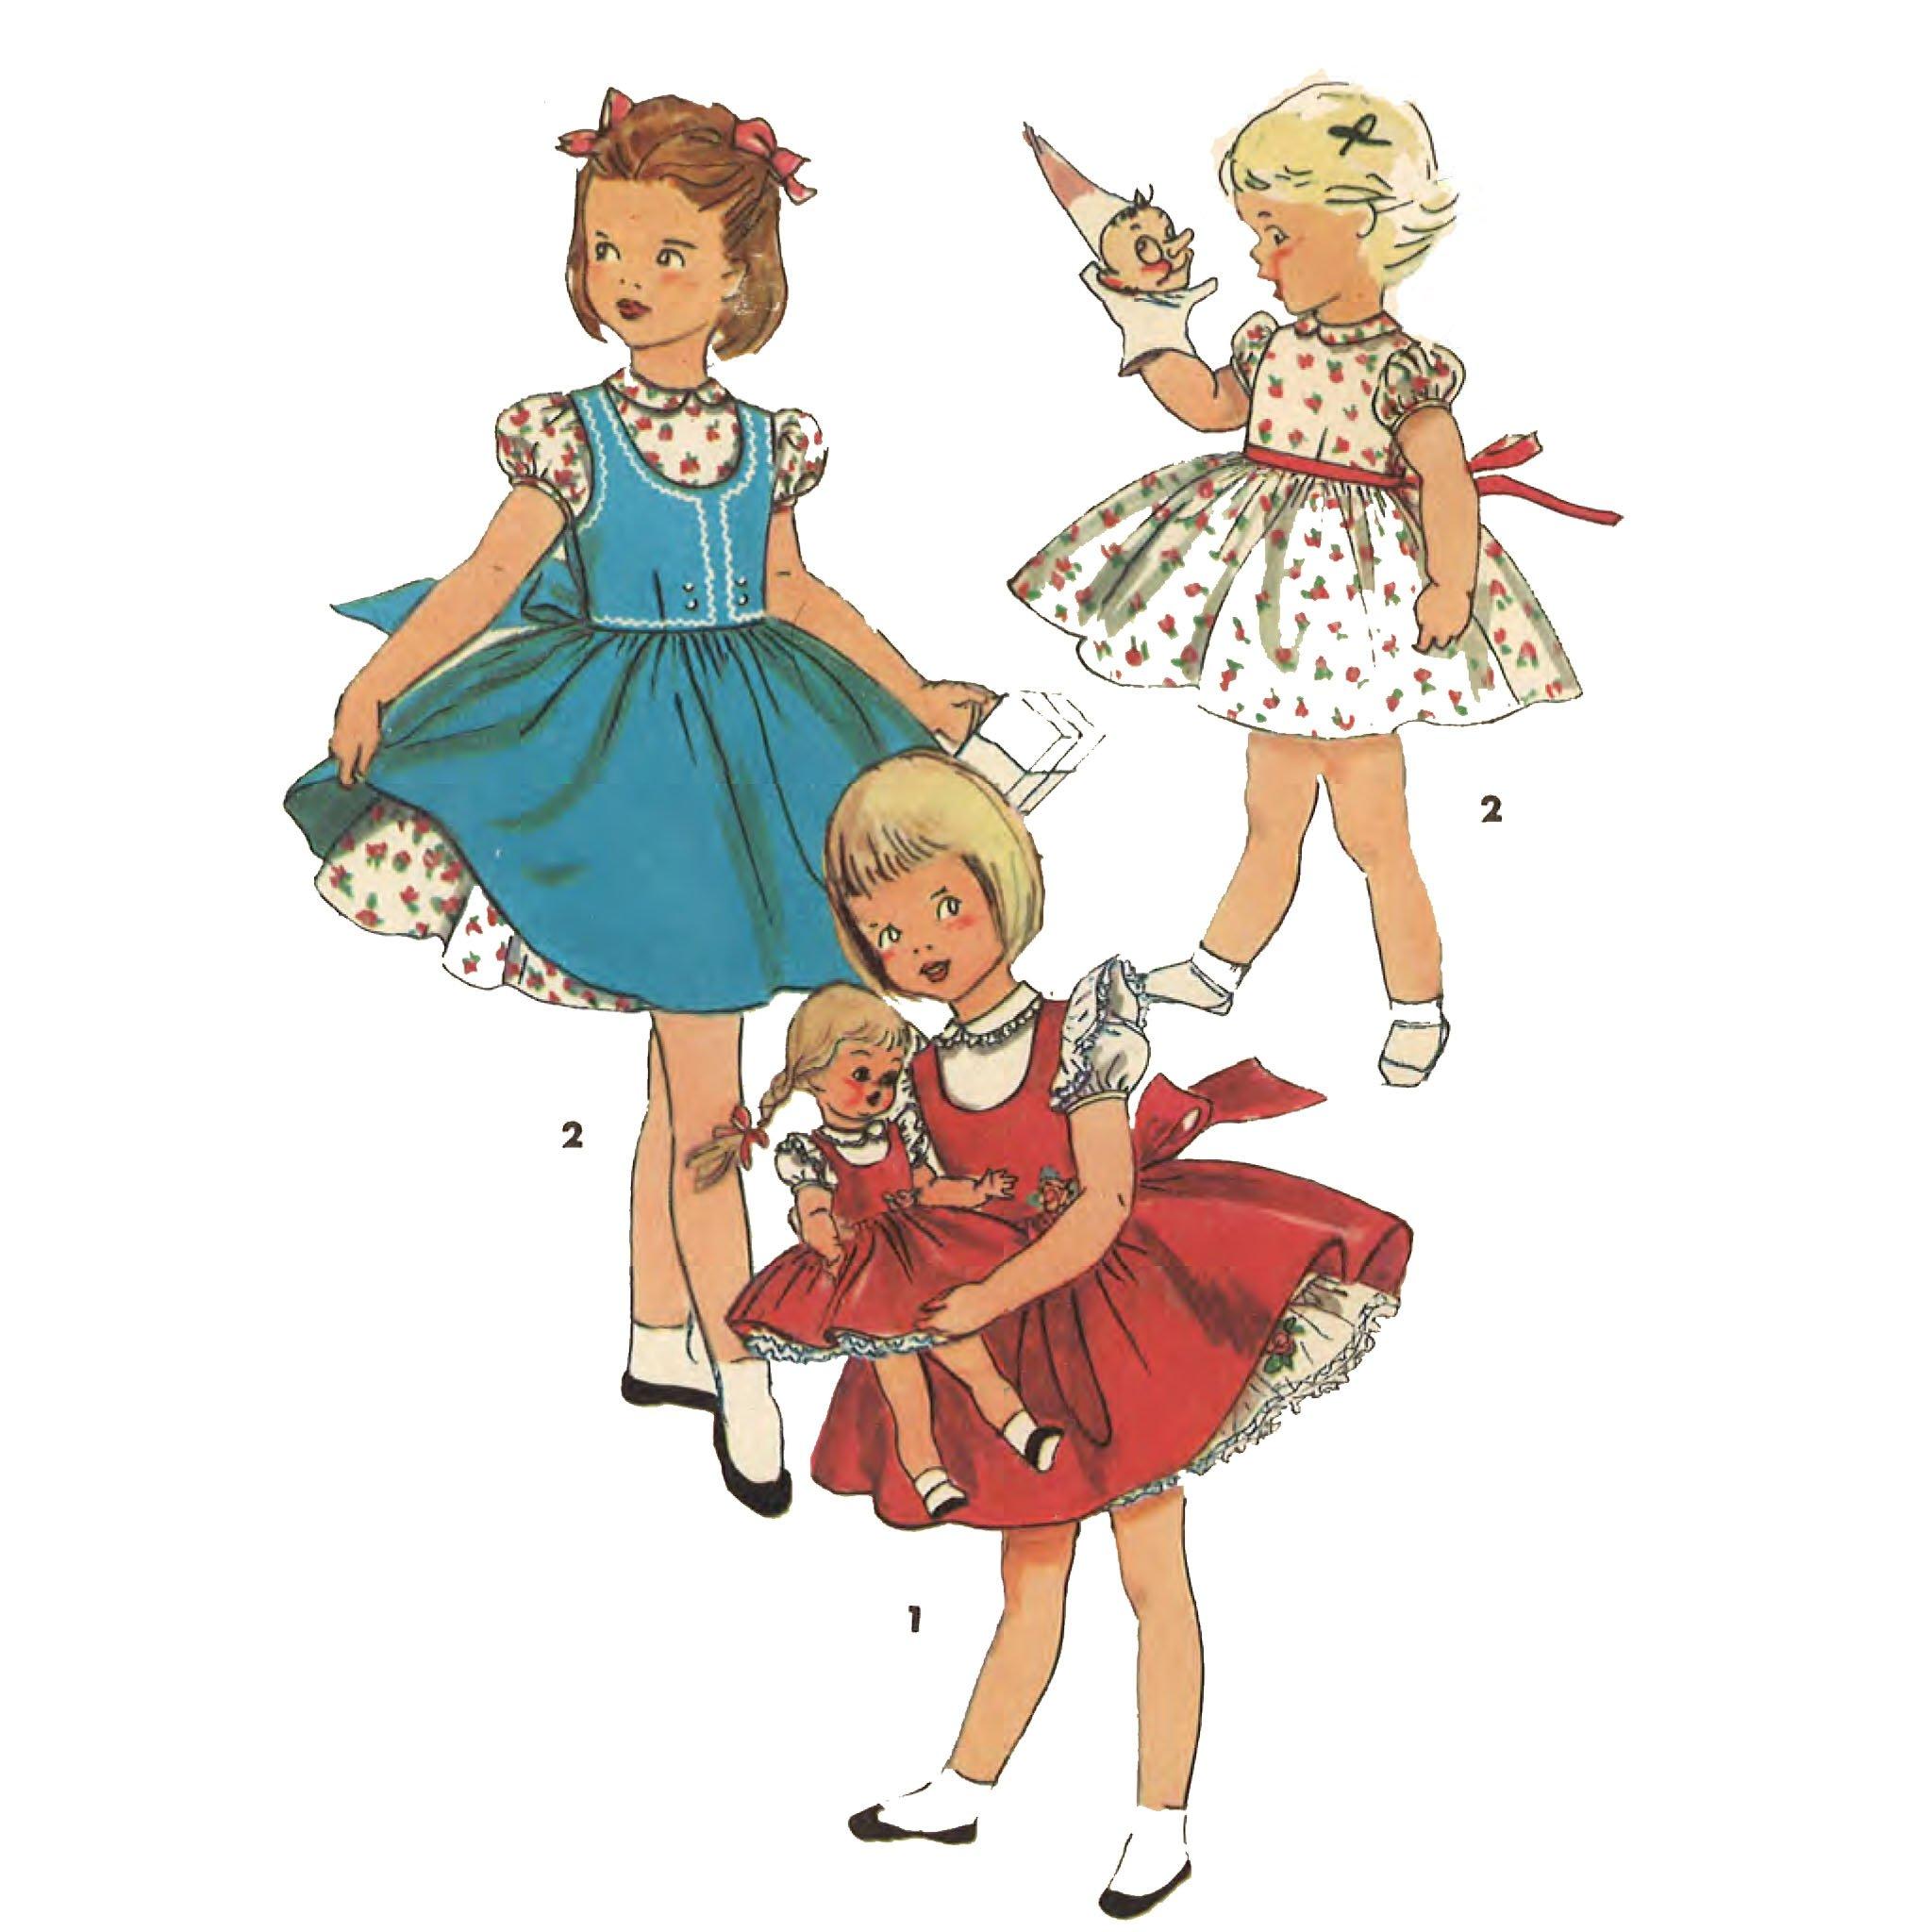 Child's Doll, Alice in Wonderland Doll, 1940s Vintage Sewing